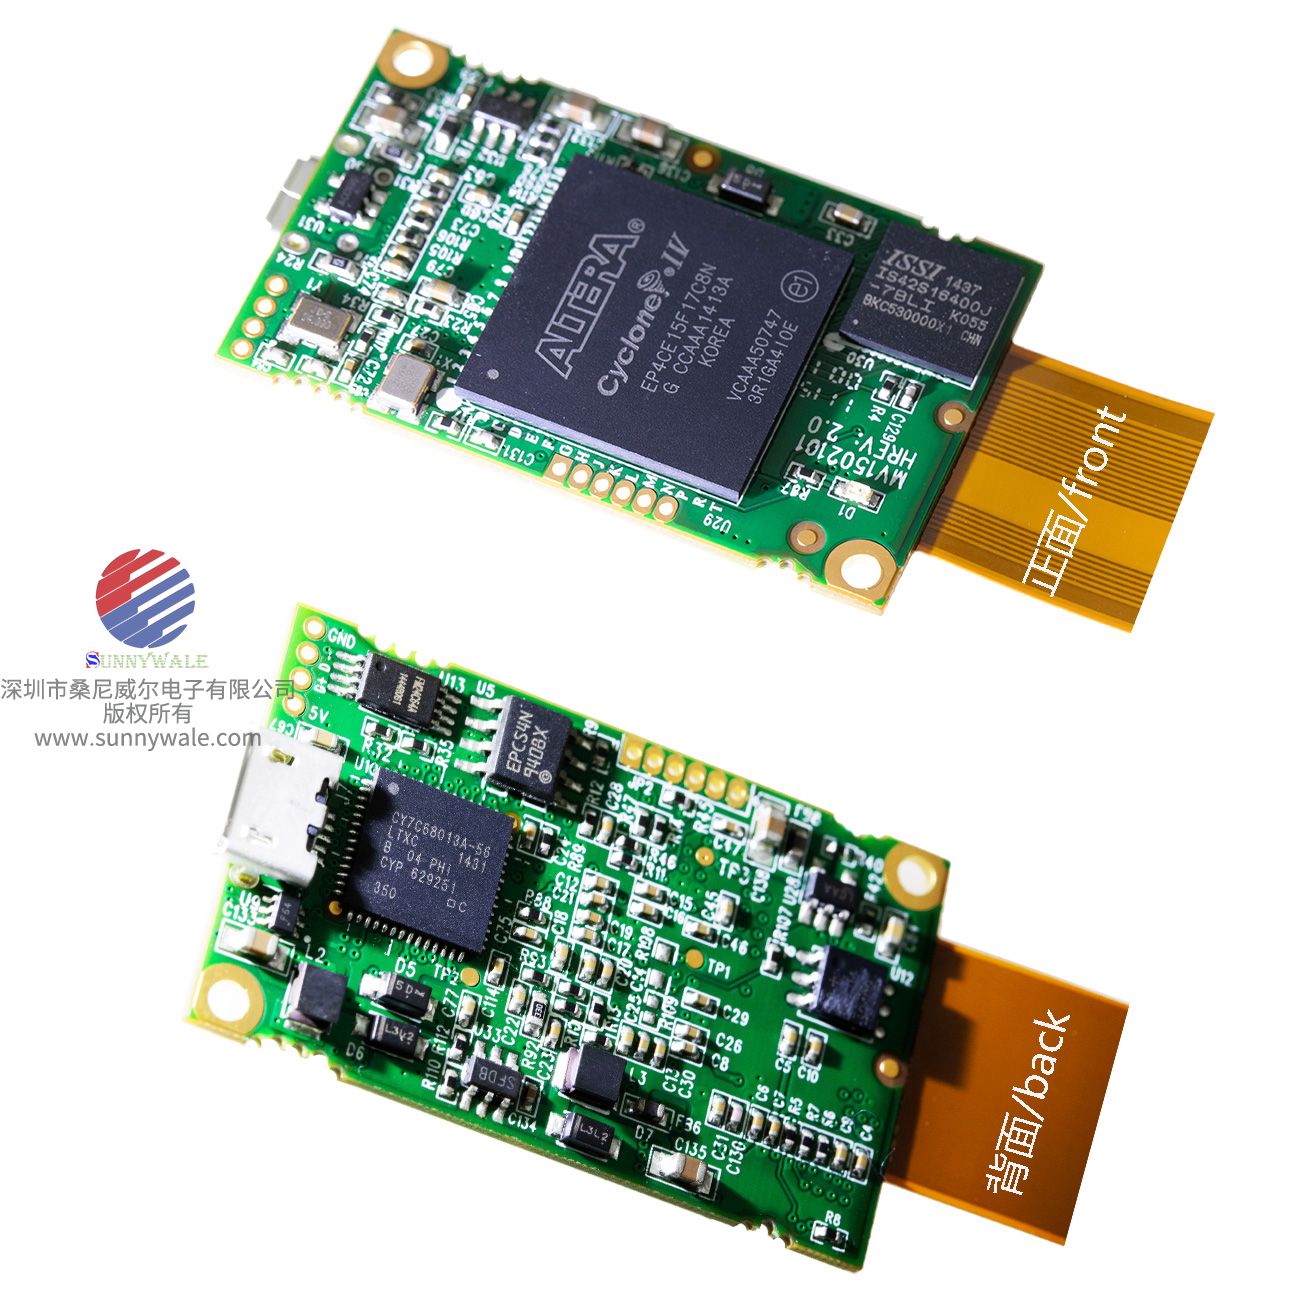 EV76C660ABT，MSS5, e2v图像传感器，1.3M超高感光度sensor，全新成品摄像头模组，机械臂工业相机、手持扫描仪模组，EP4CE15F17C8N，阿特拉FPGA，现场可编程门阵列，field-programmable gate array，爱尔创3D扫描仪Upscan-xx摄像头，爱尔创3D扫描仪驱动程序，CY7C68013 USB2.0驱动程序下载，带算力智能摄像头模组